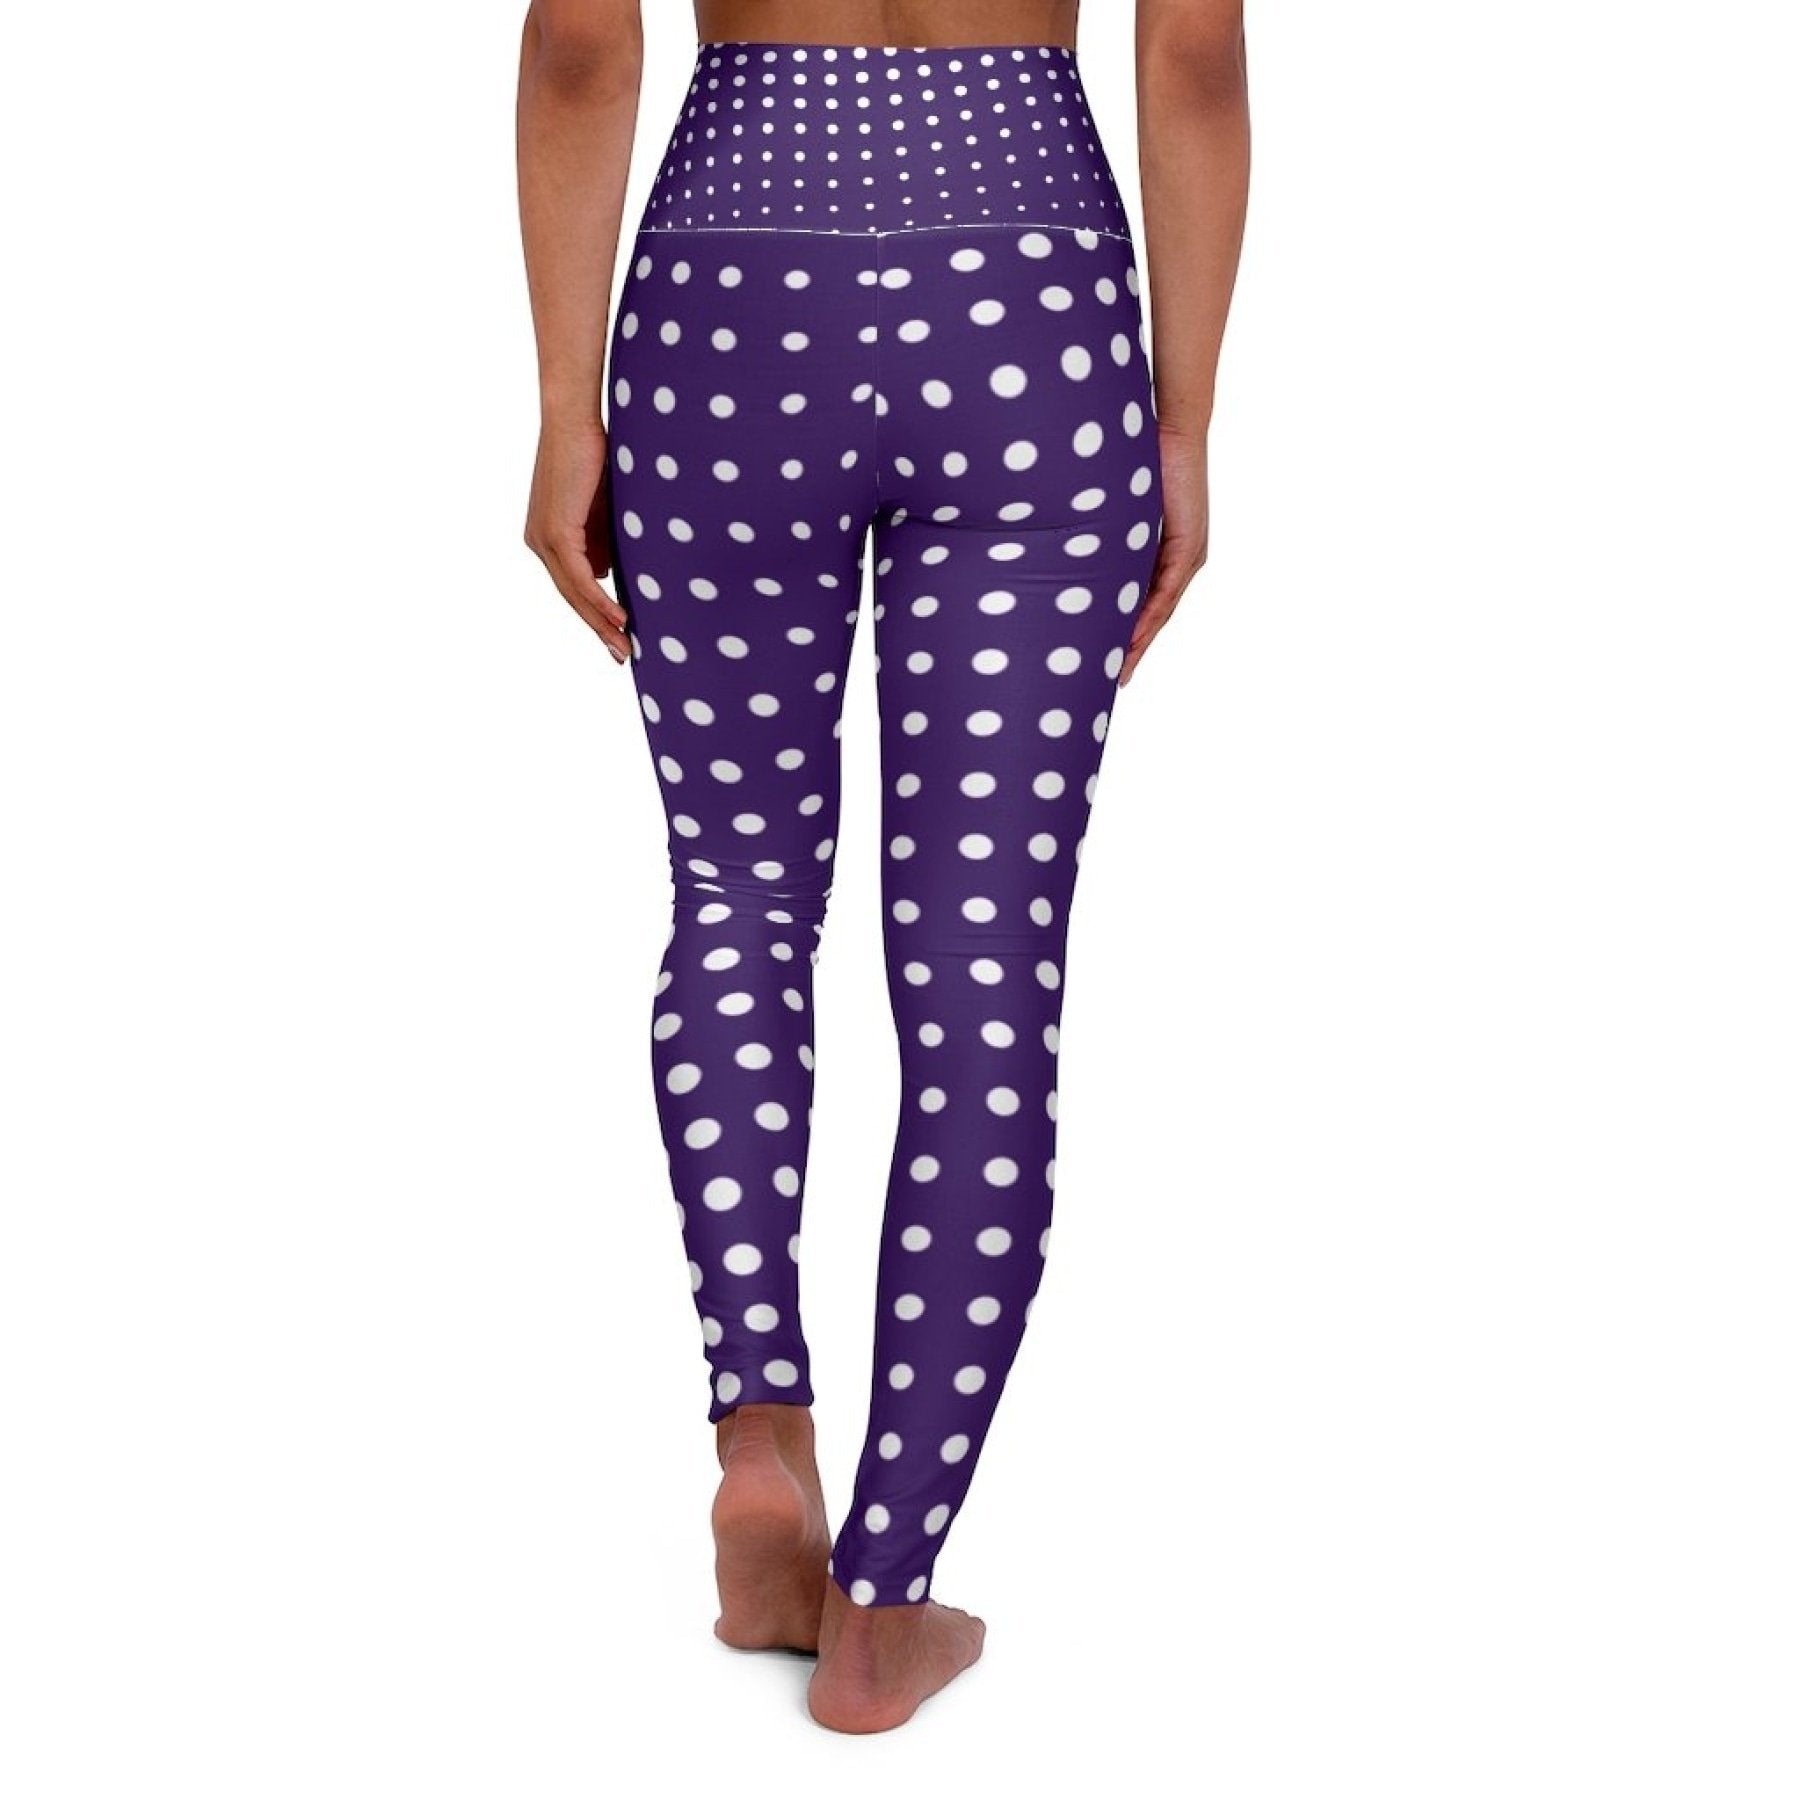 High Waisted Yoga Pants, Purple And White Polka Dot Style Sports Pants